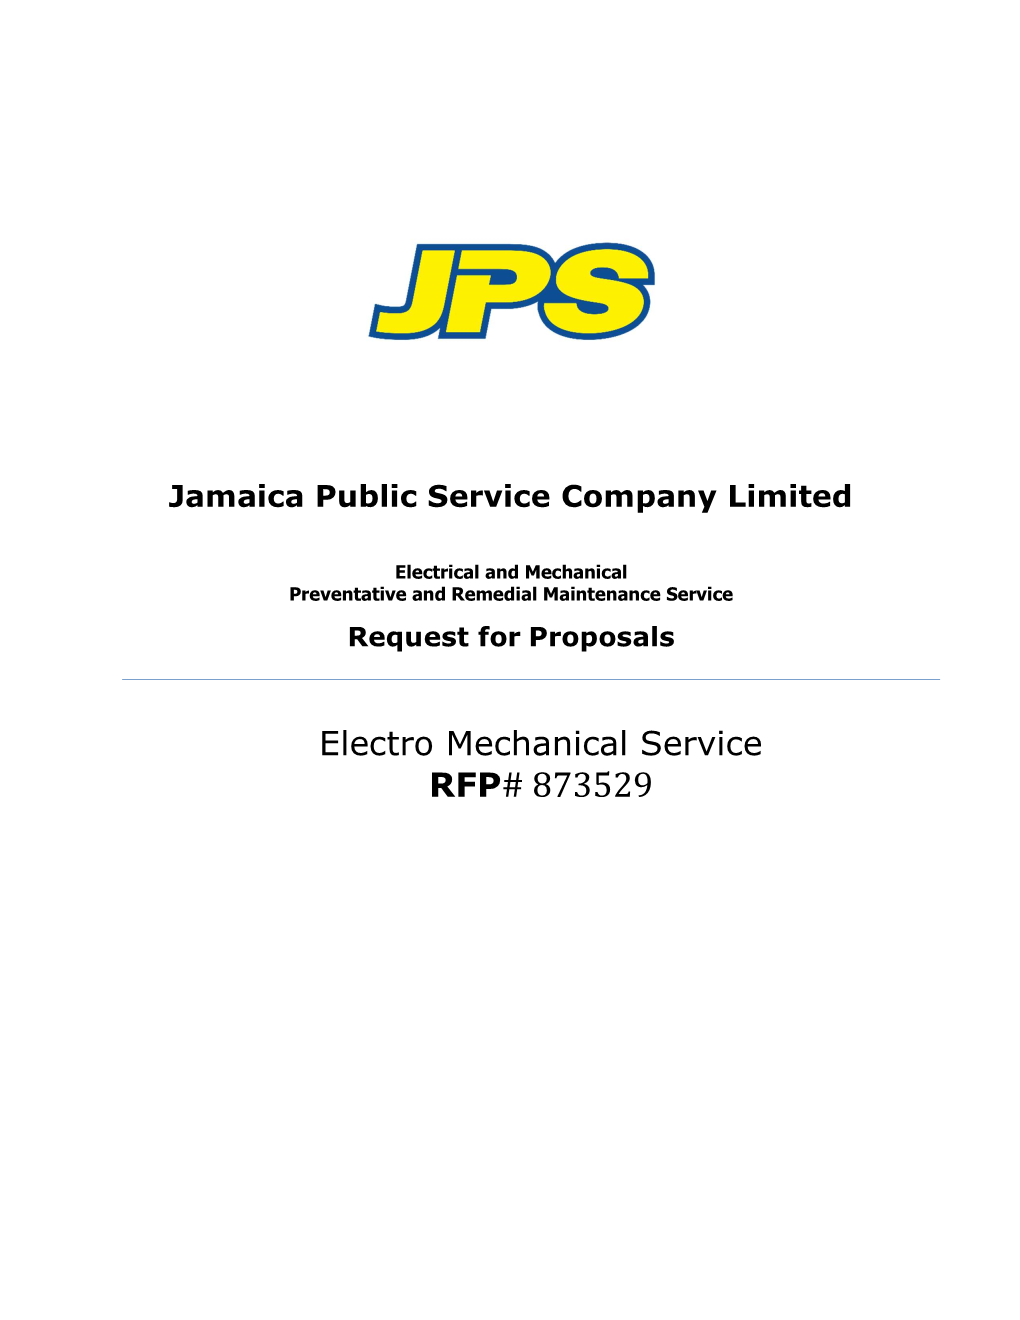 JPS RFP # 873529 – Electro Mechanical Service